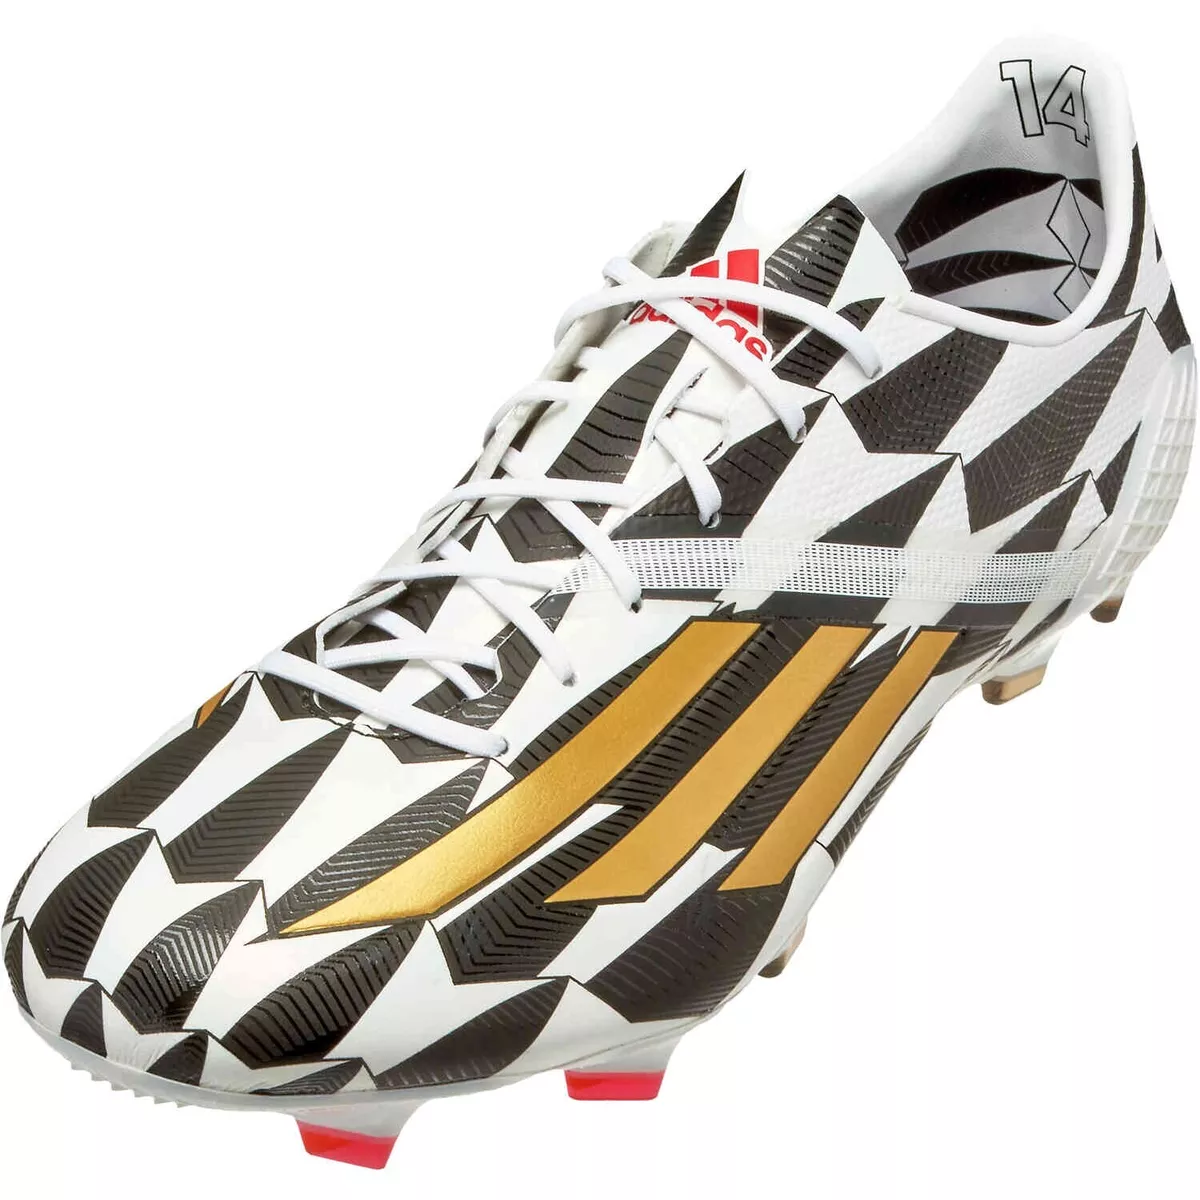 adidas F50 Adizero IV Ground Boots Soccer Cleats Shoes Men Size 12.5US | eBay